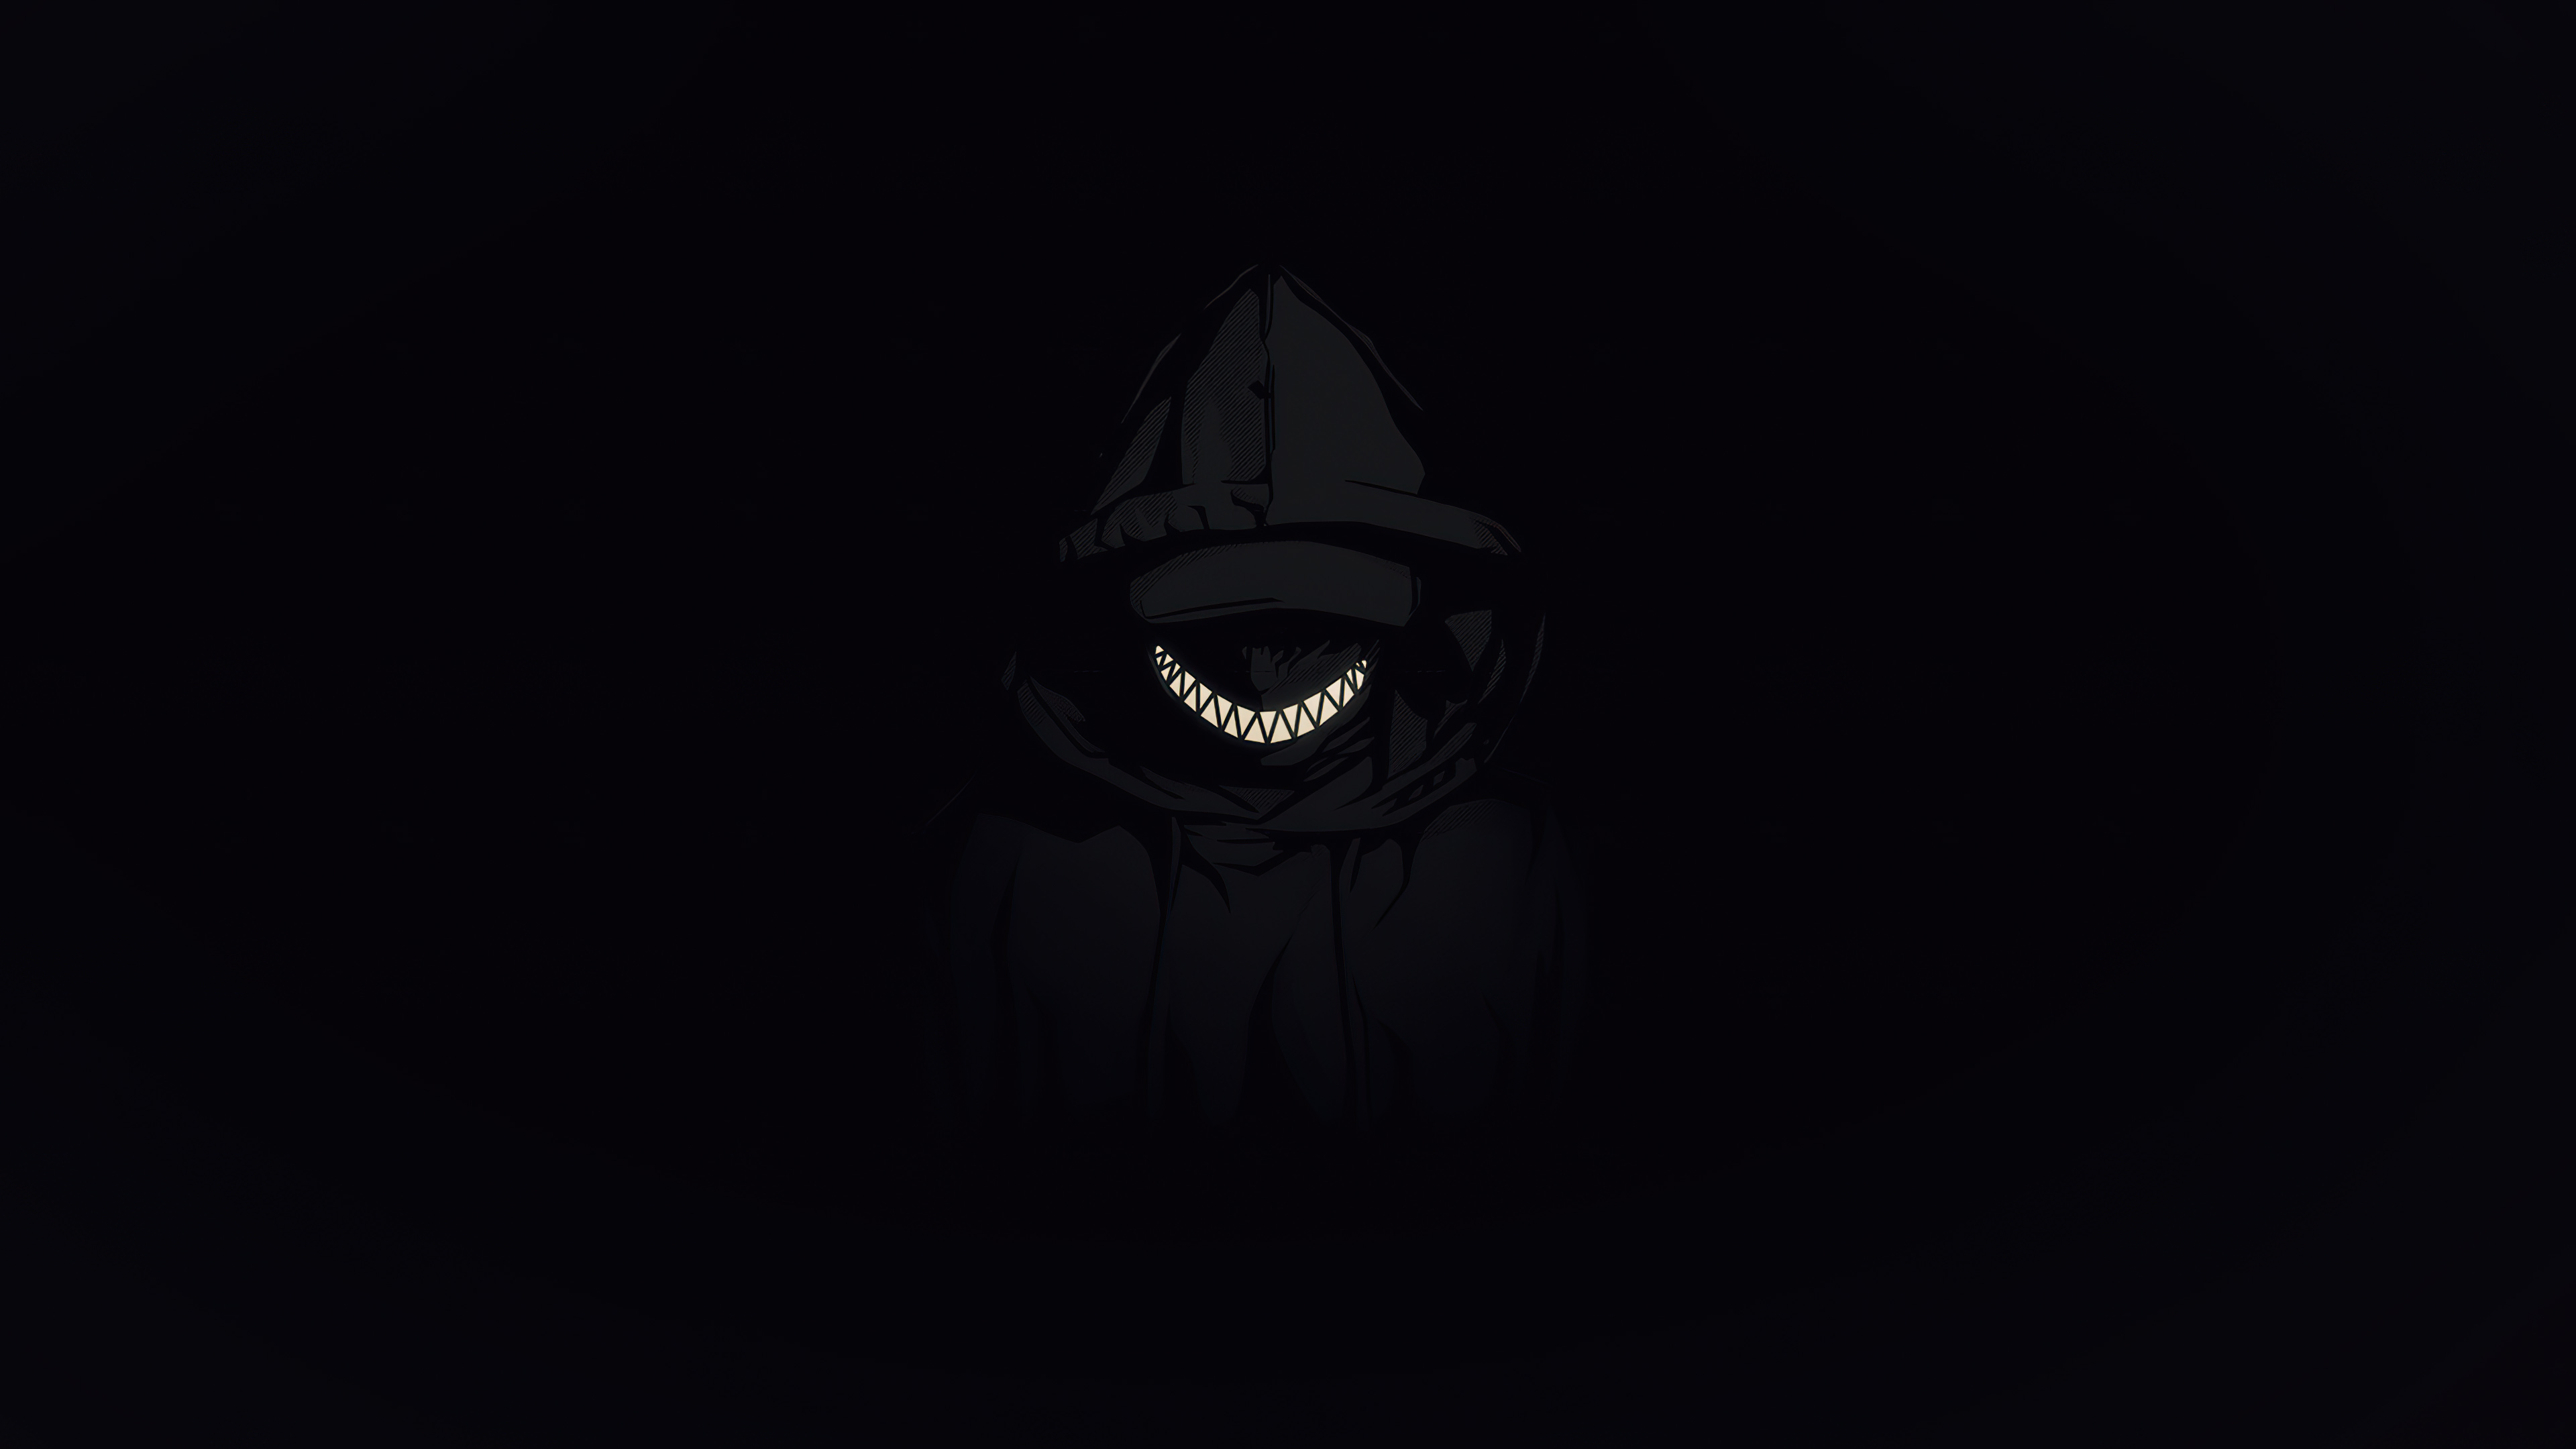 hooded jacket boy smiling minimal dark 4k 1614617827 - Hooded Jacket Boy Smiling Minimal Dark 4k - Hooded Jacket Boy Smiling Minimal Dark 4k wallpapers